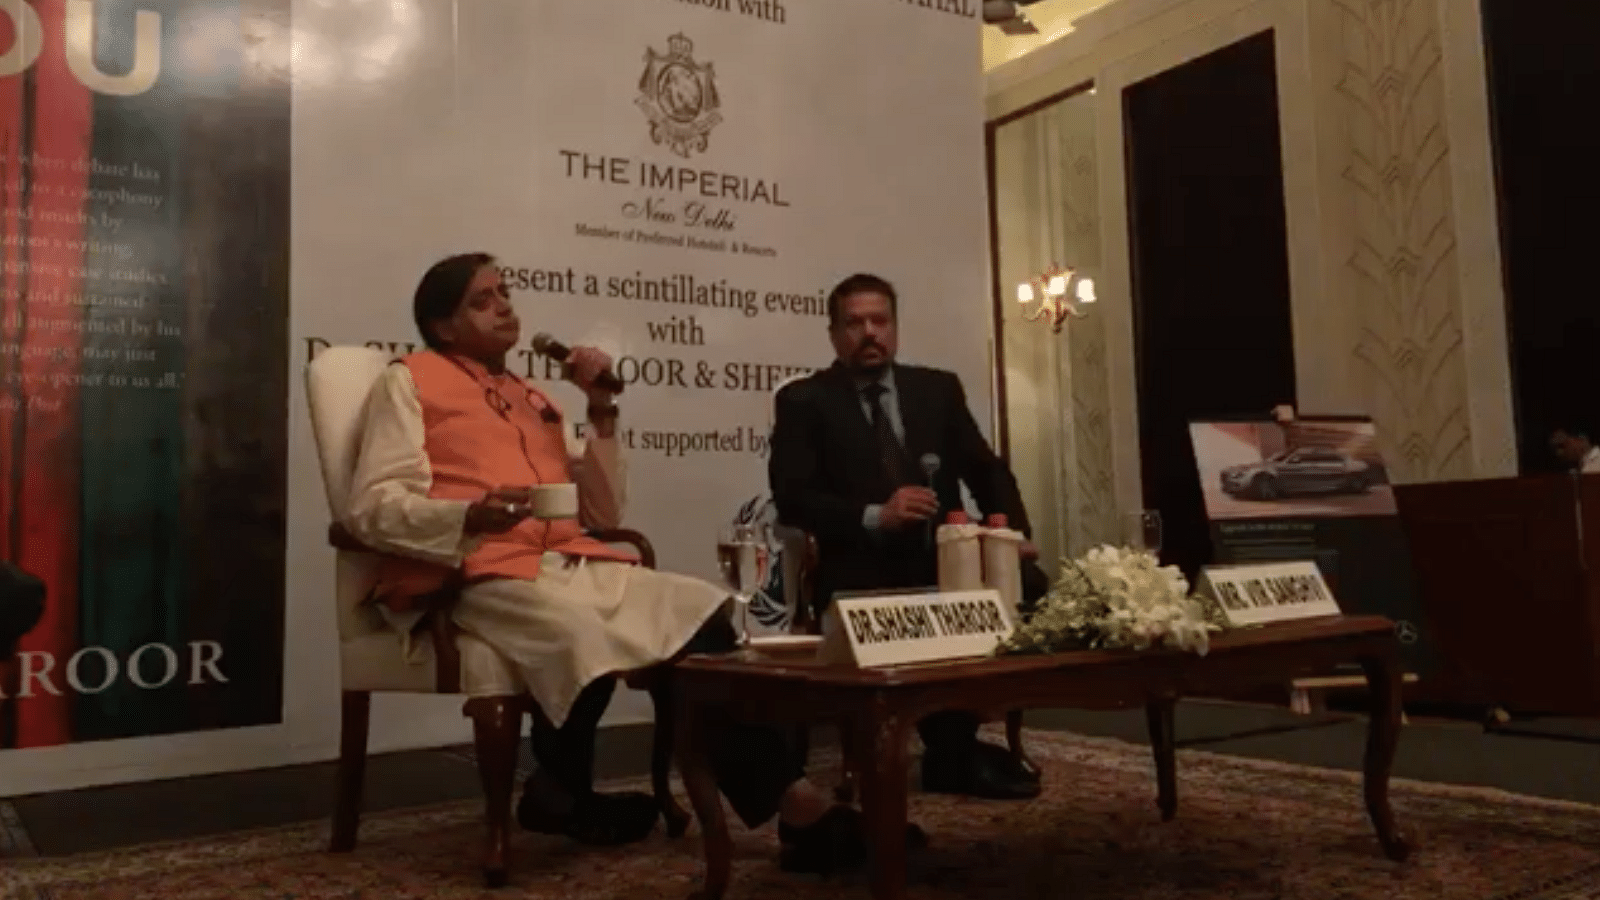 Congress MP Shashi Tharoor in conversation with Vir Sanghvi